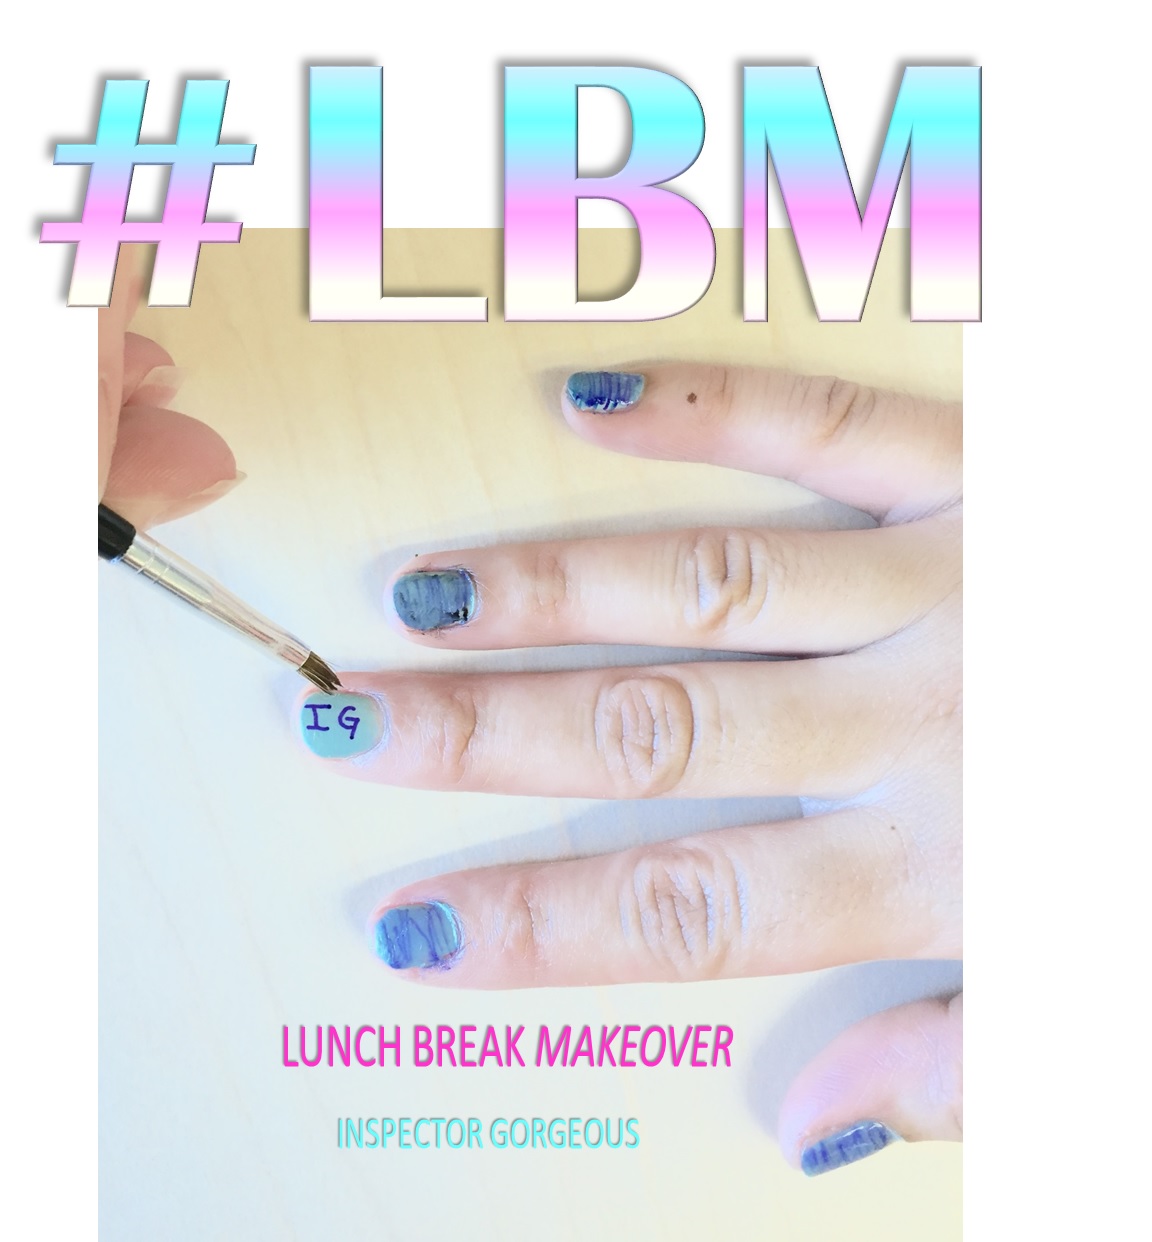 Hashtag LBM Office Mani